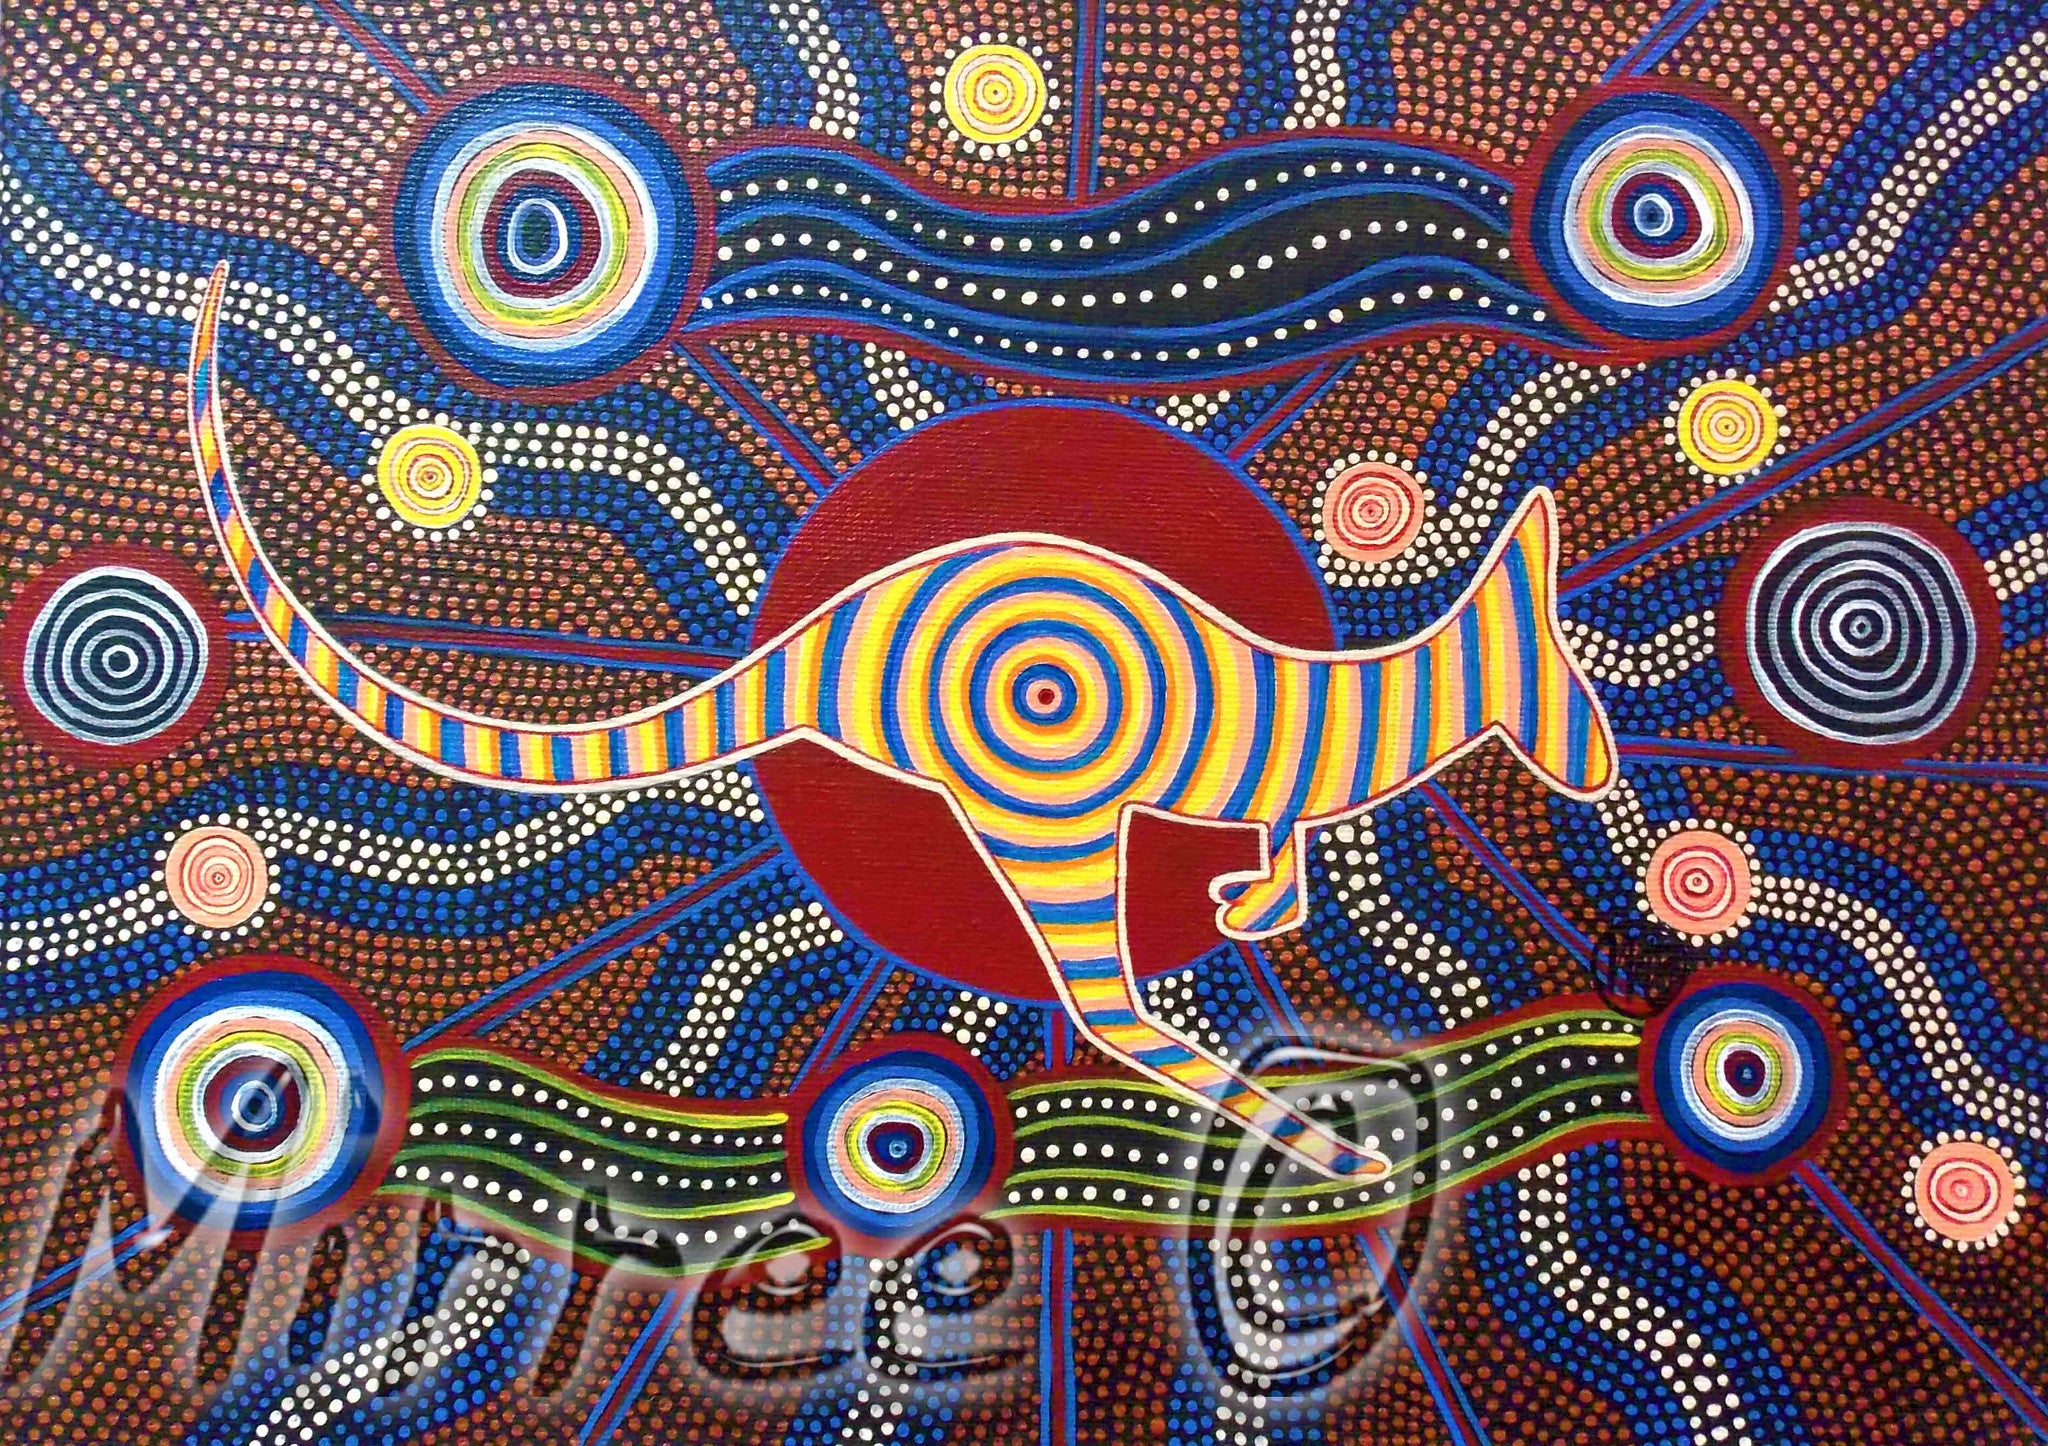 Movement of the Red Kangaroo Contempoary Aboriginal Art Original Paint